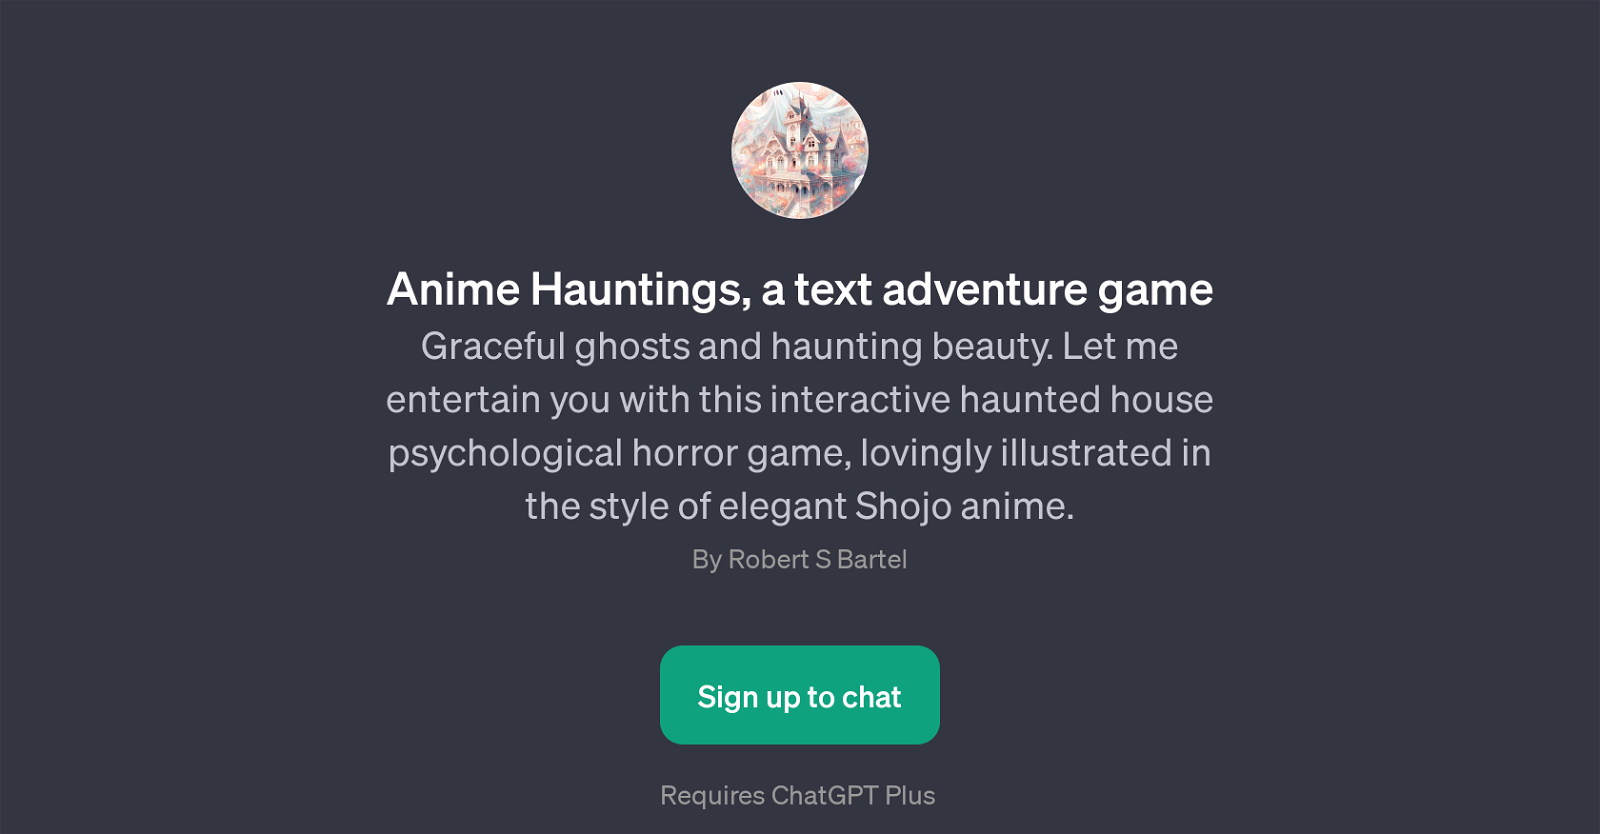 Anime Hauntings website